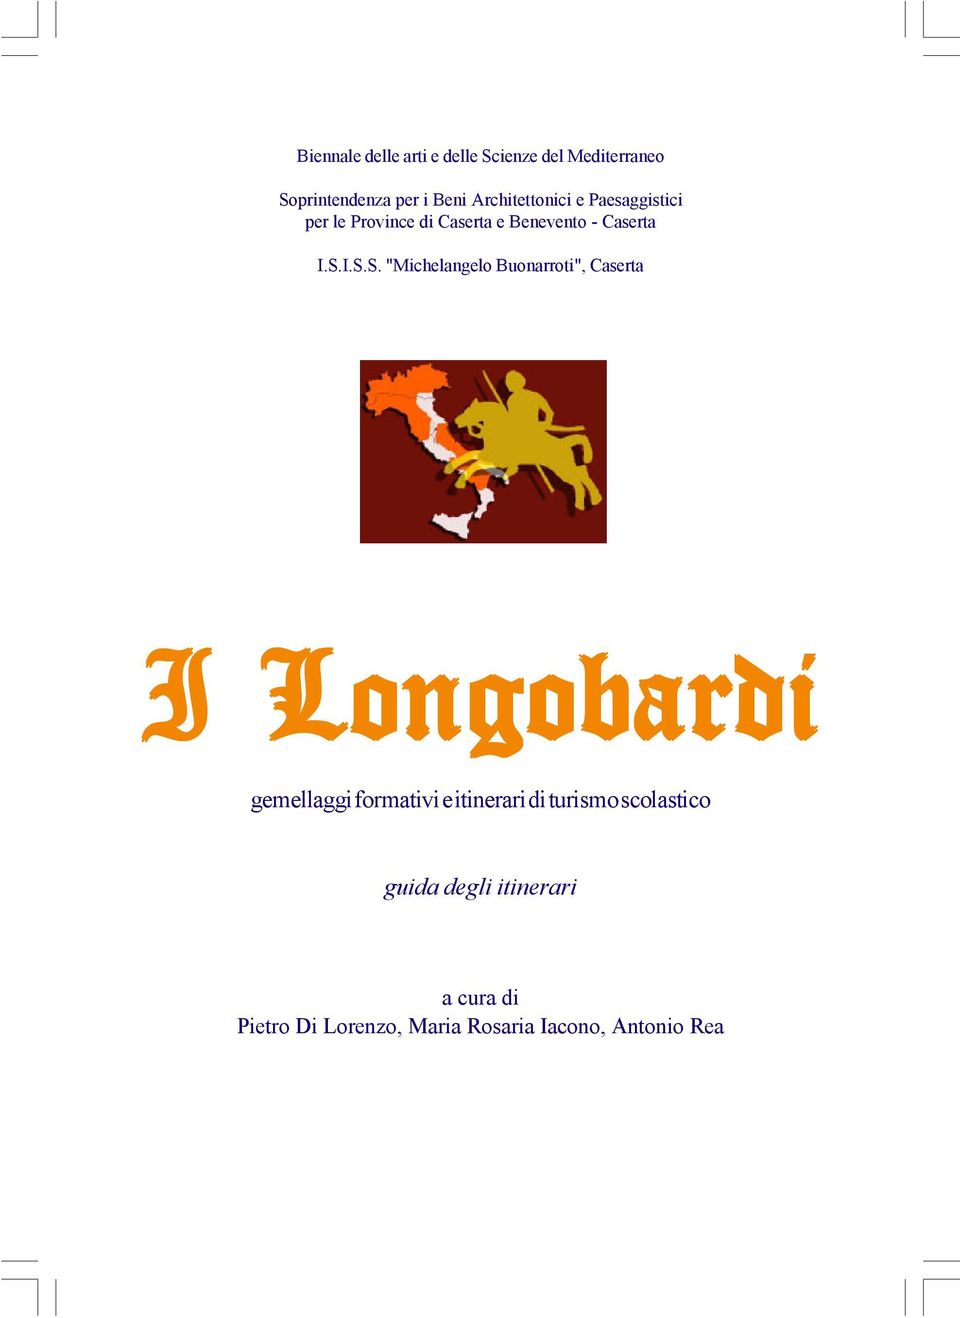 I.S.S. "Michelangelo Buonarroti", Caserta I Longobardi gemellaggi formativi e itinerari